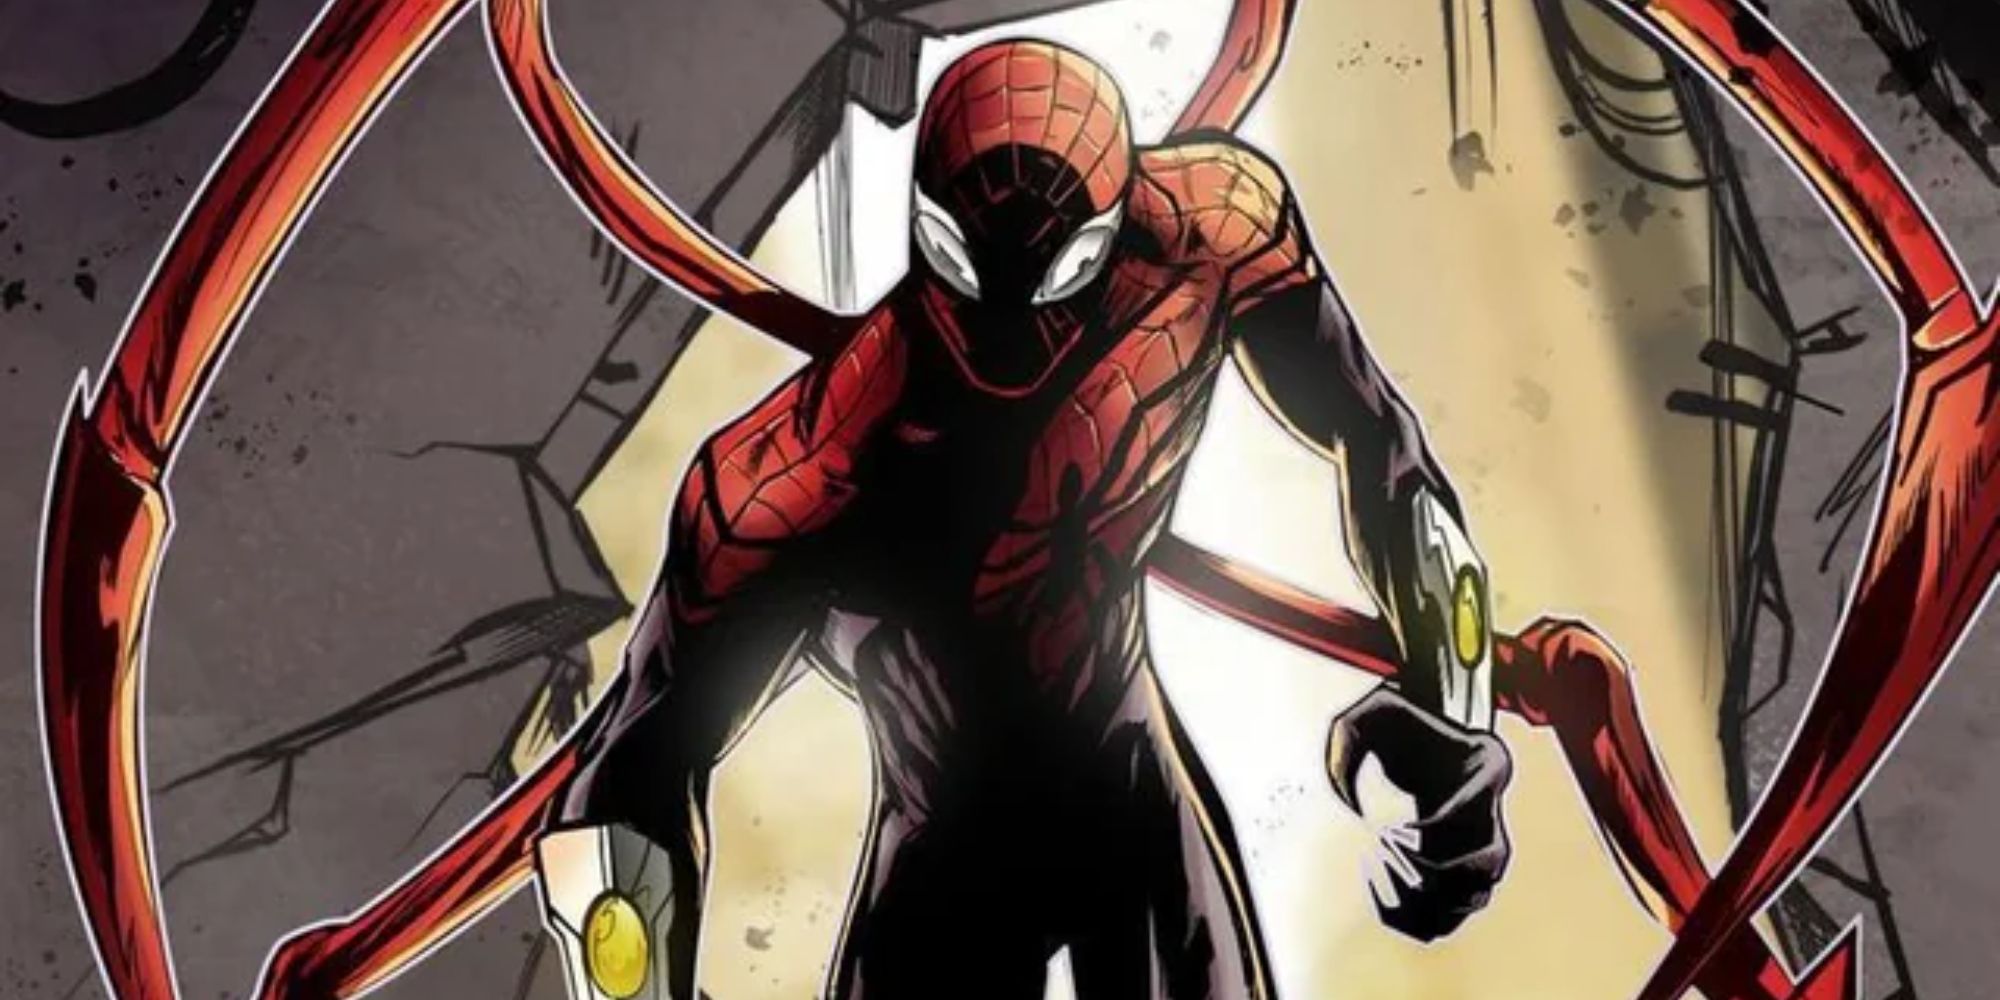 Superior Spider-Man entering a broken wall